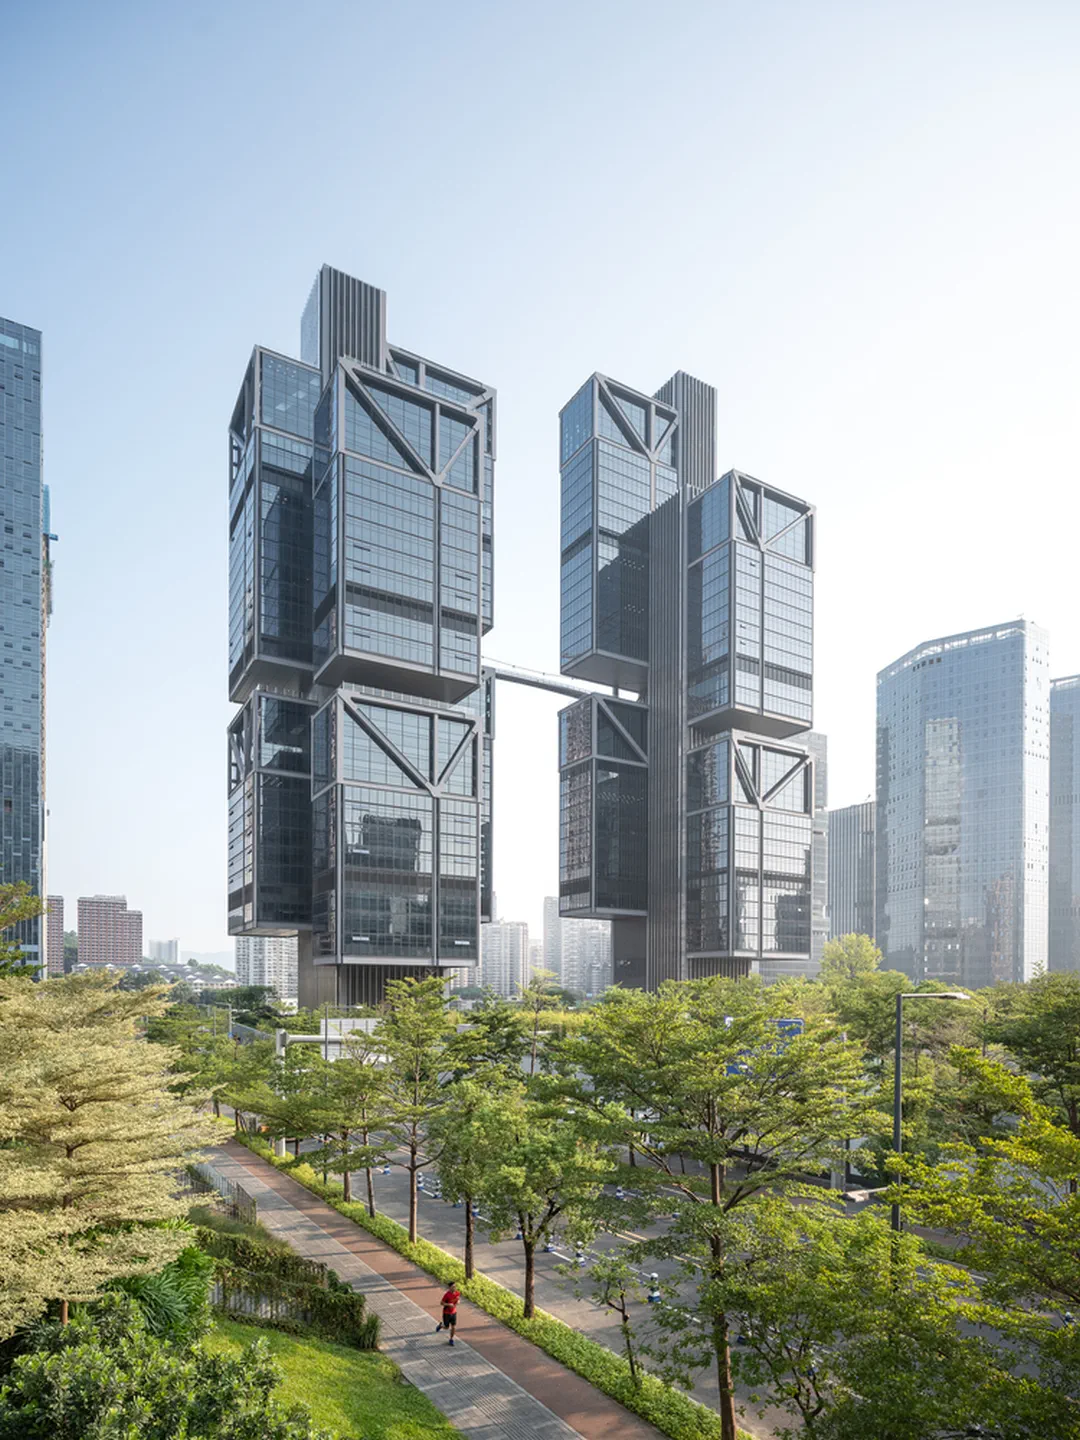 DJI Sky City: A New Landmark for Shenzhen